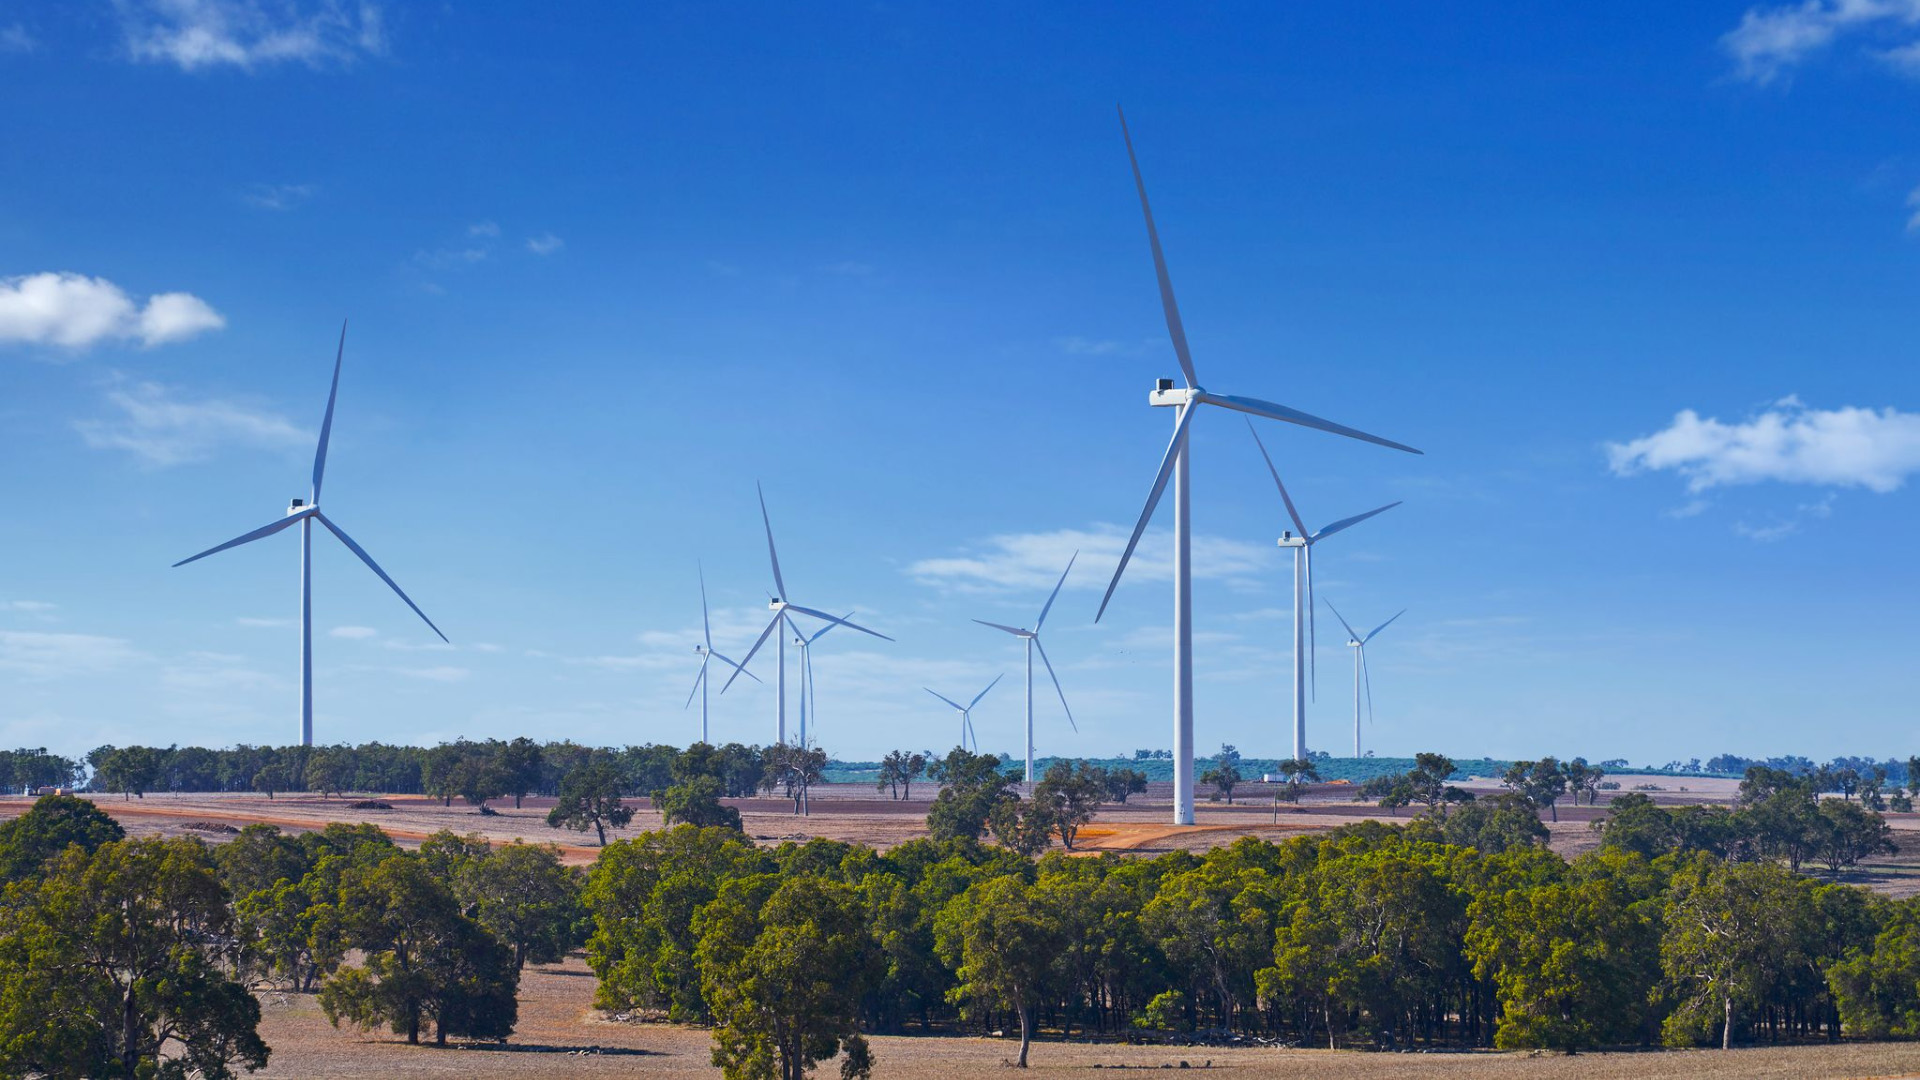 Yandin Wind Farm in Australia produces renewable electricity